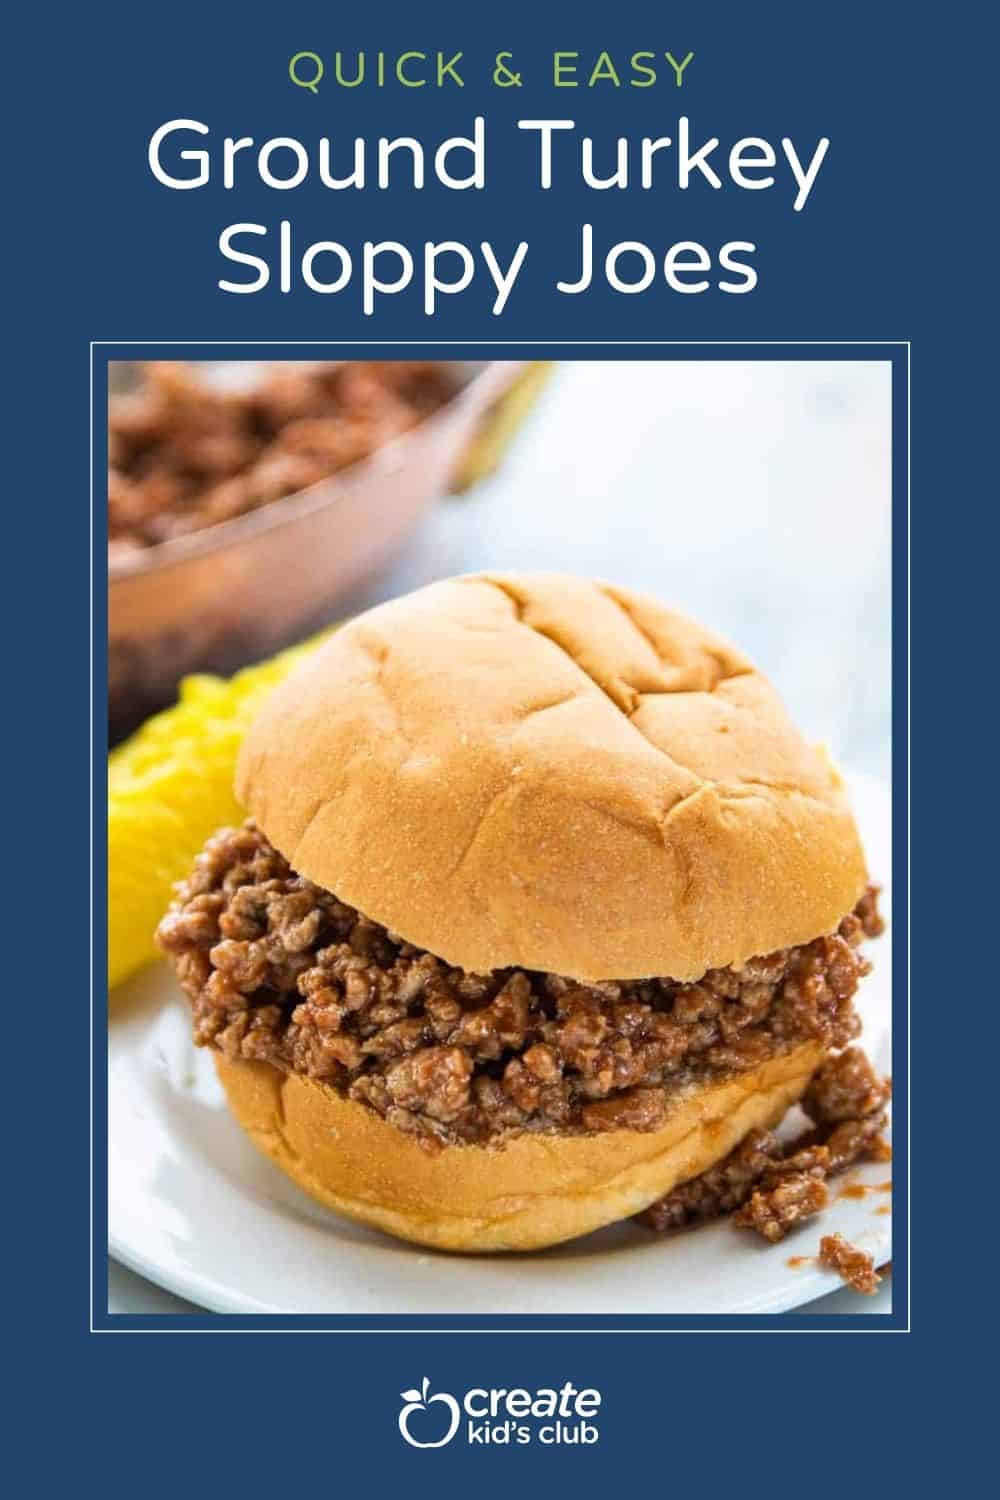 pin of turkey sloppy joes